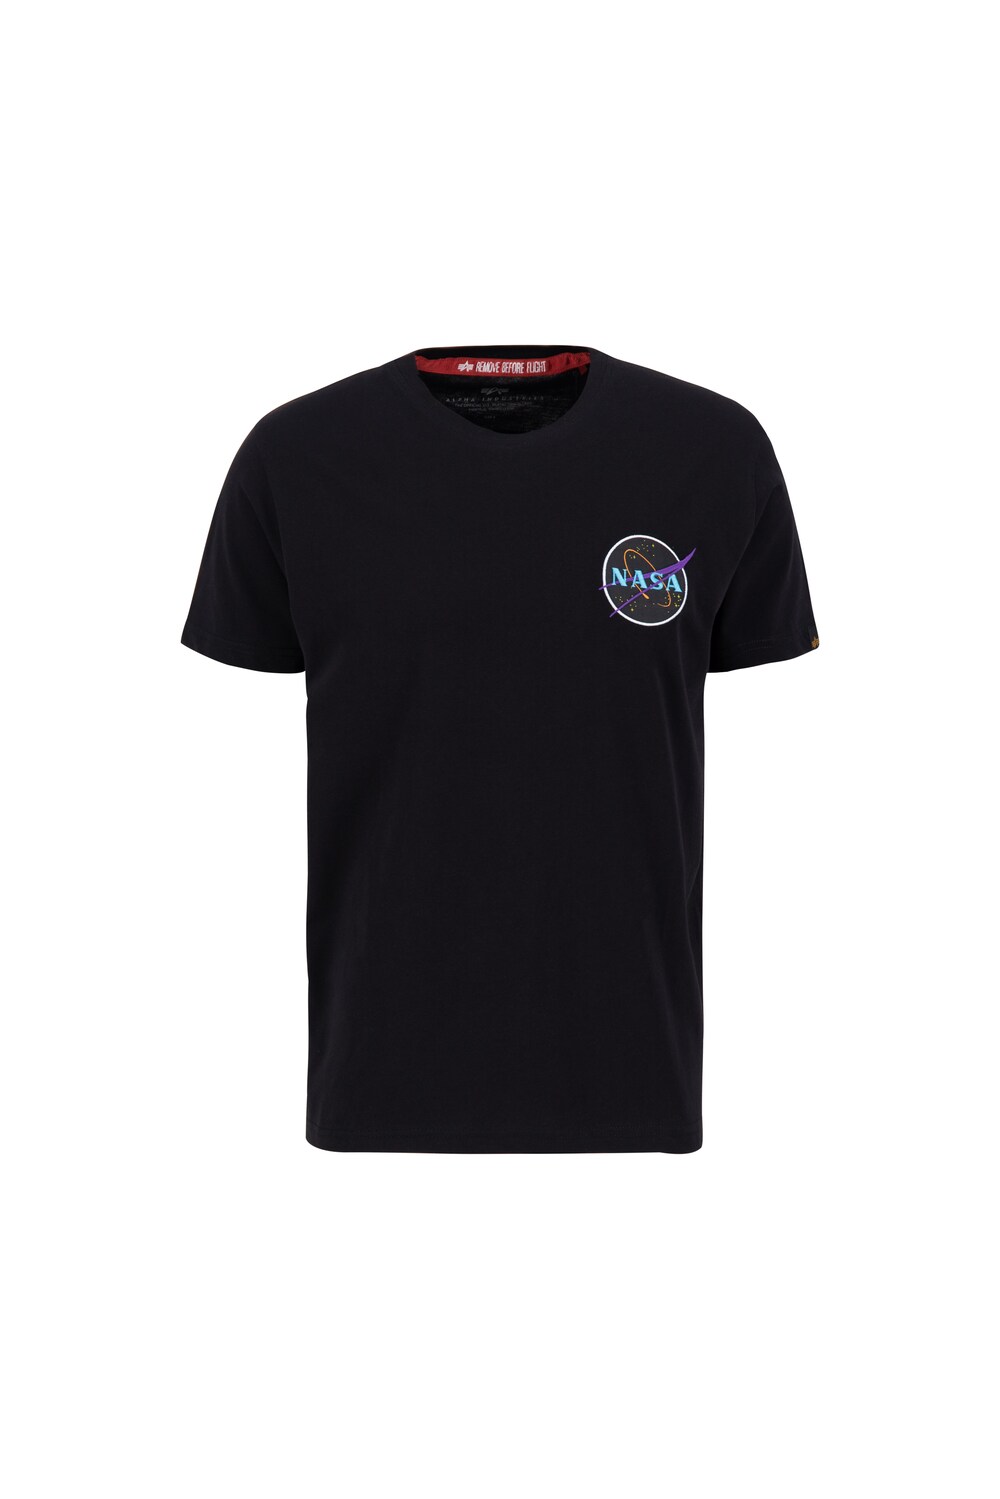 Футболка Alpha Industries Space Shuttle, черный мужская футболка alpha industries nasa space shuttle белый размер s